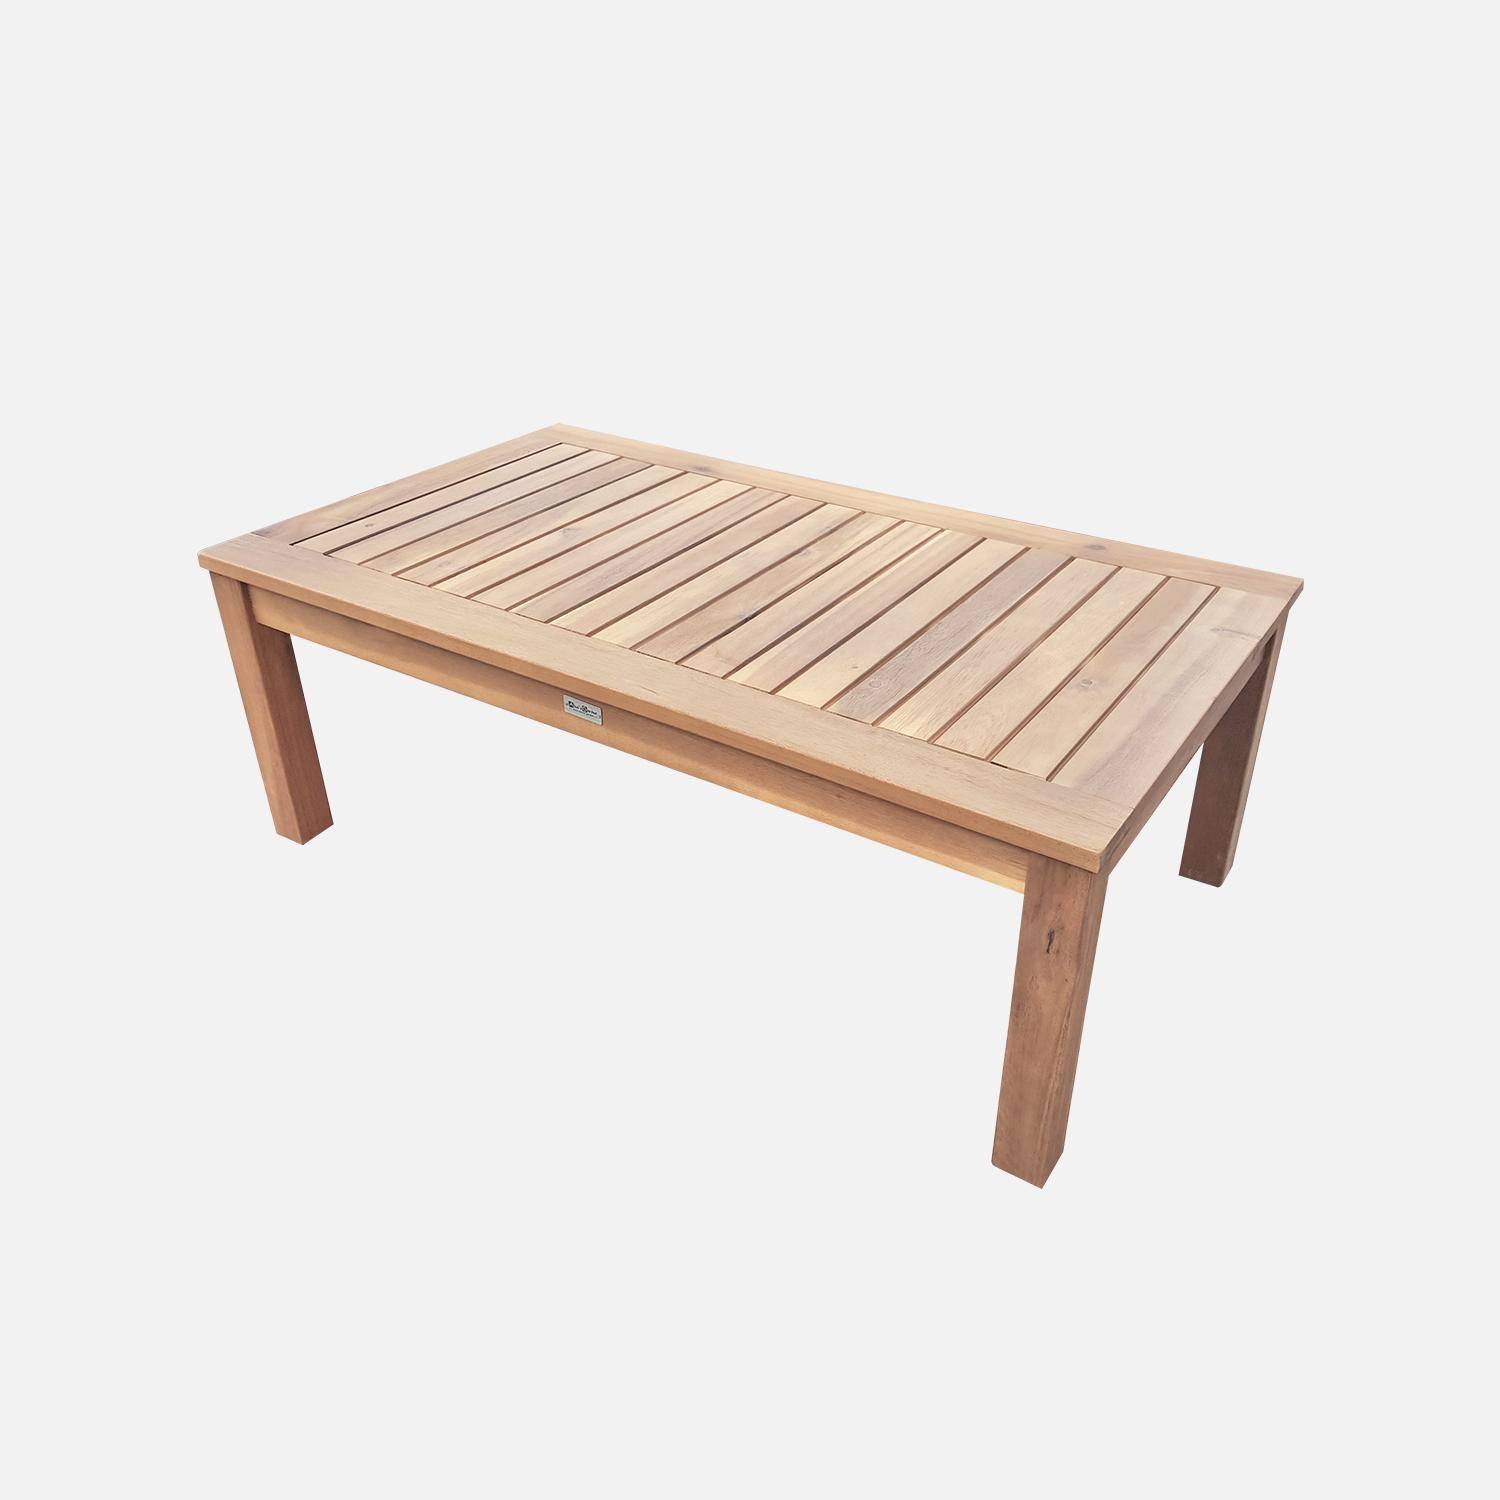 4-seater wooden garden sofa - Acacia wood sofa, armchairs and coffee table, designer piece  - Ushuaia - Grey Photo5